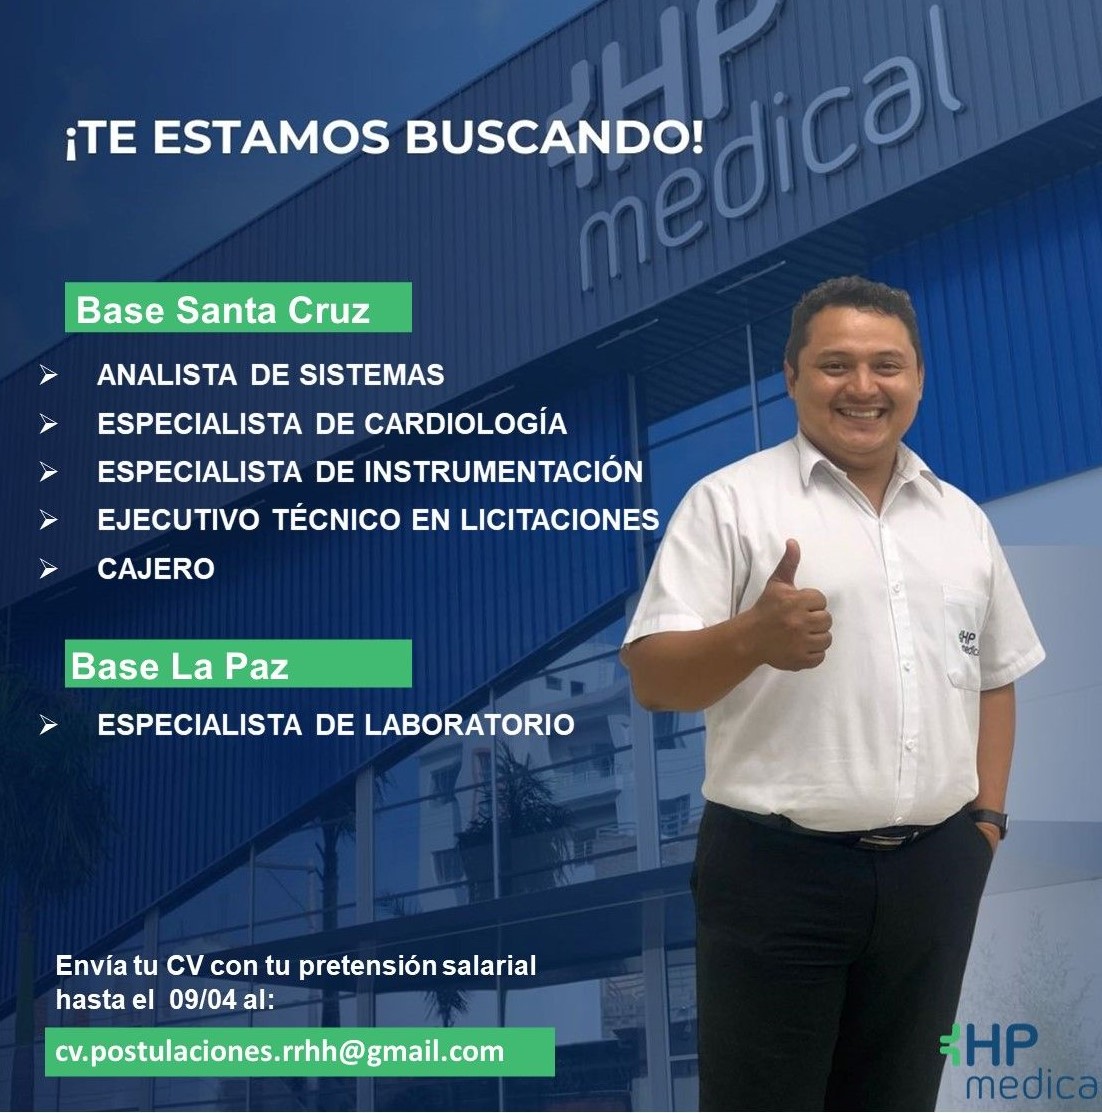 hp medical